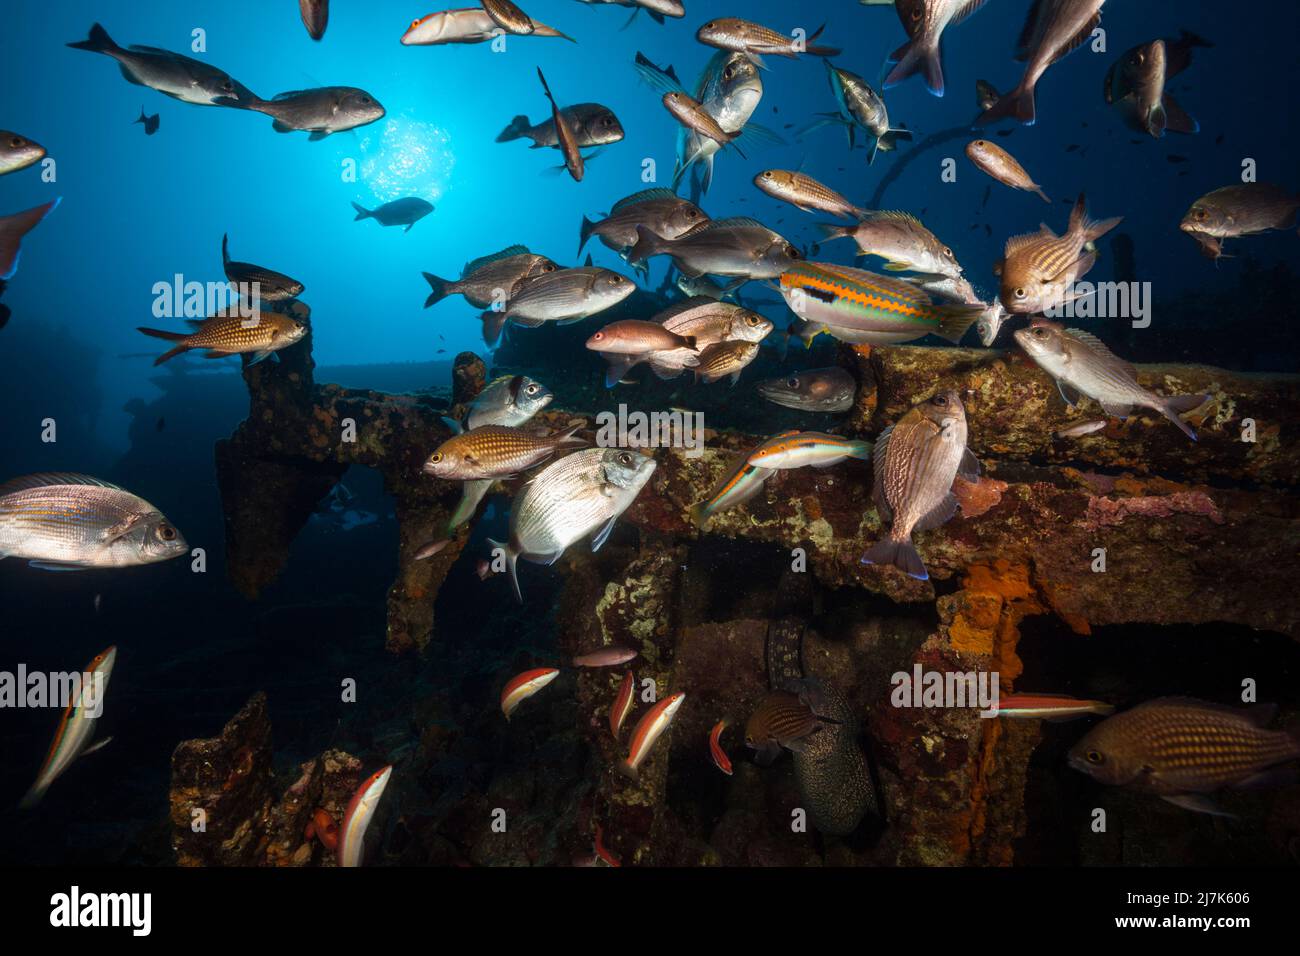 School of fish at Teti Wreck, Vis Island, Mediterranean Sea, Croatia Stock Photo